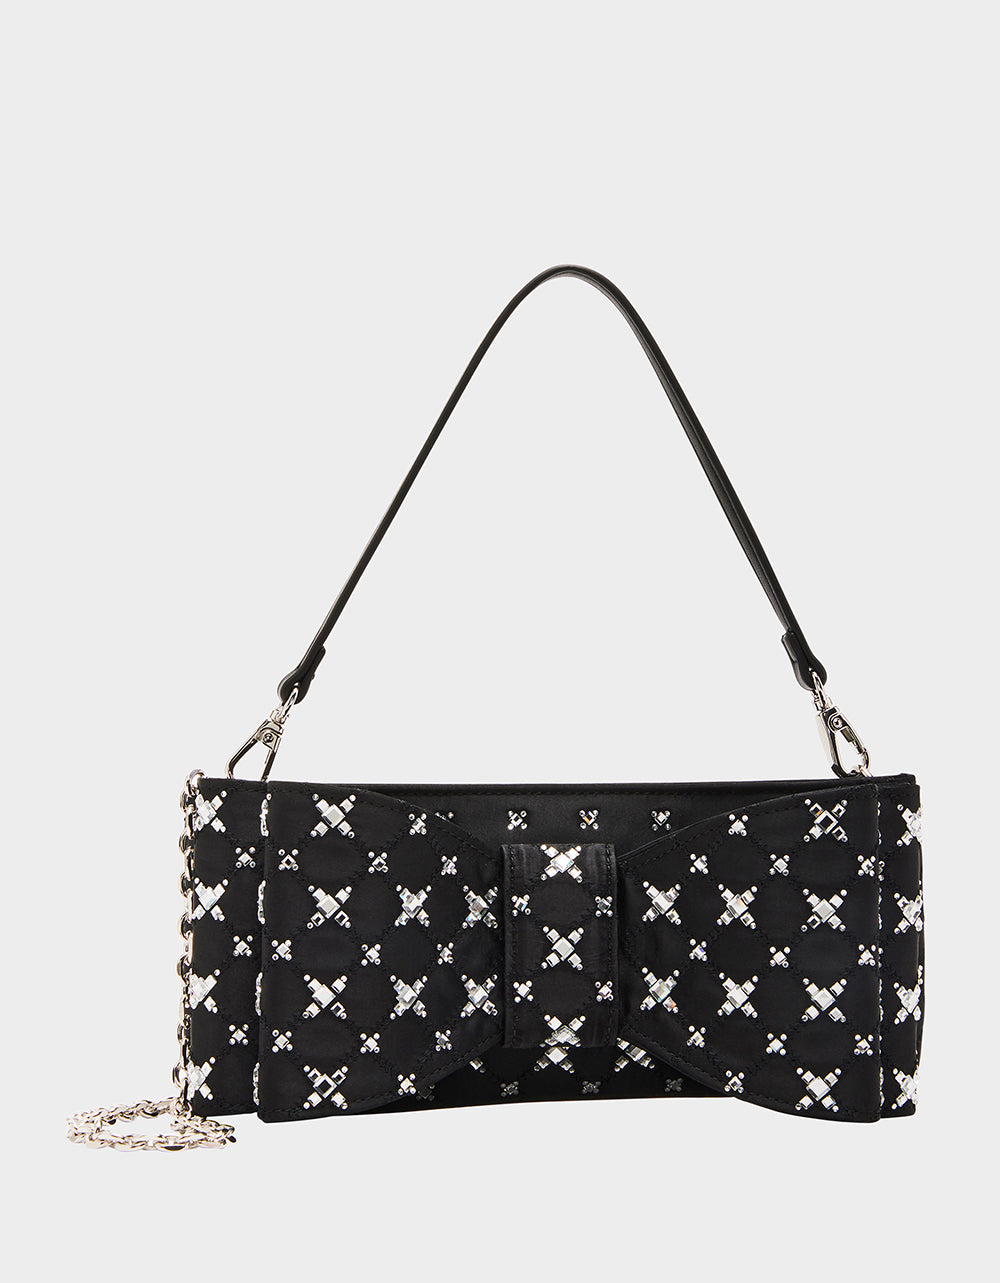 betsey johnson Metallic Iridescent bow Handbag Crossbody Bag Satchel | eBay